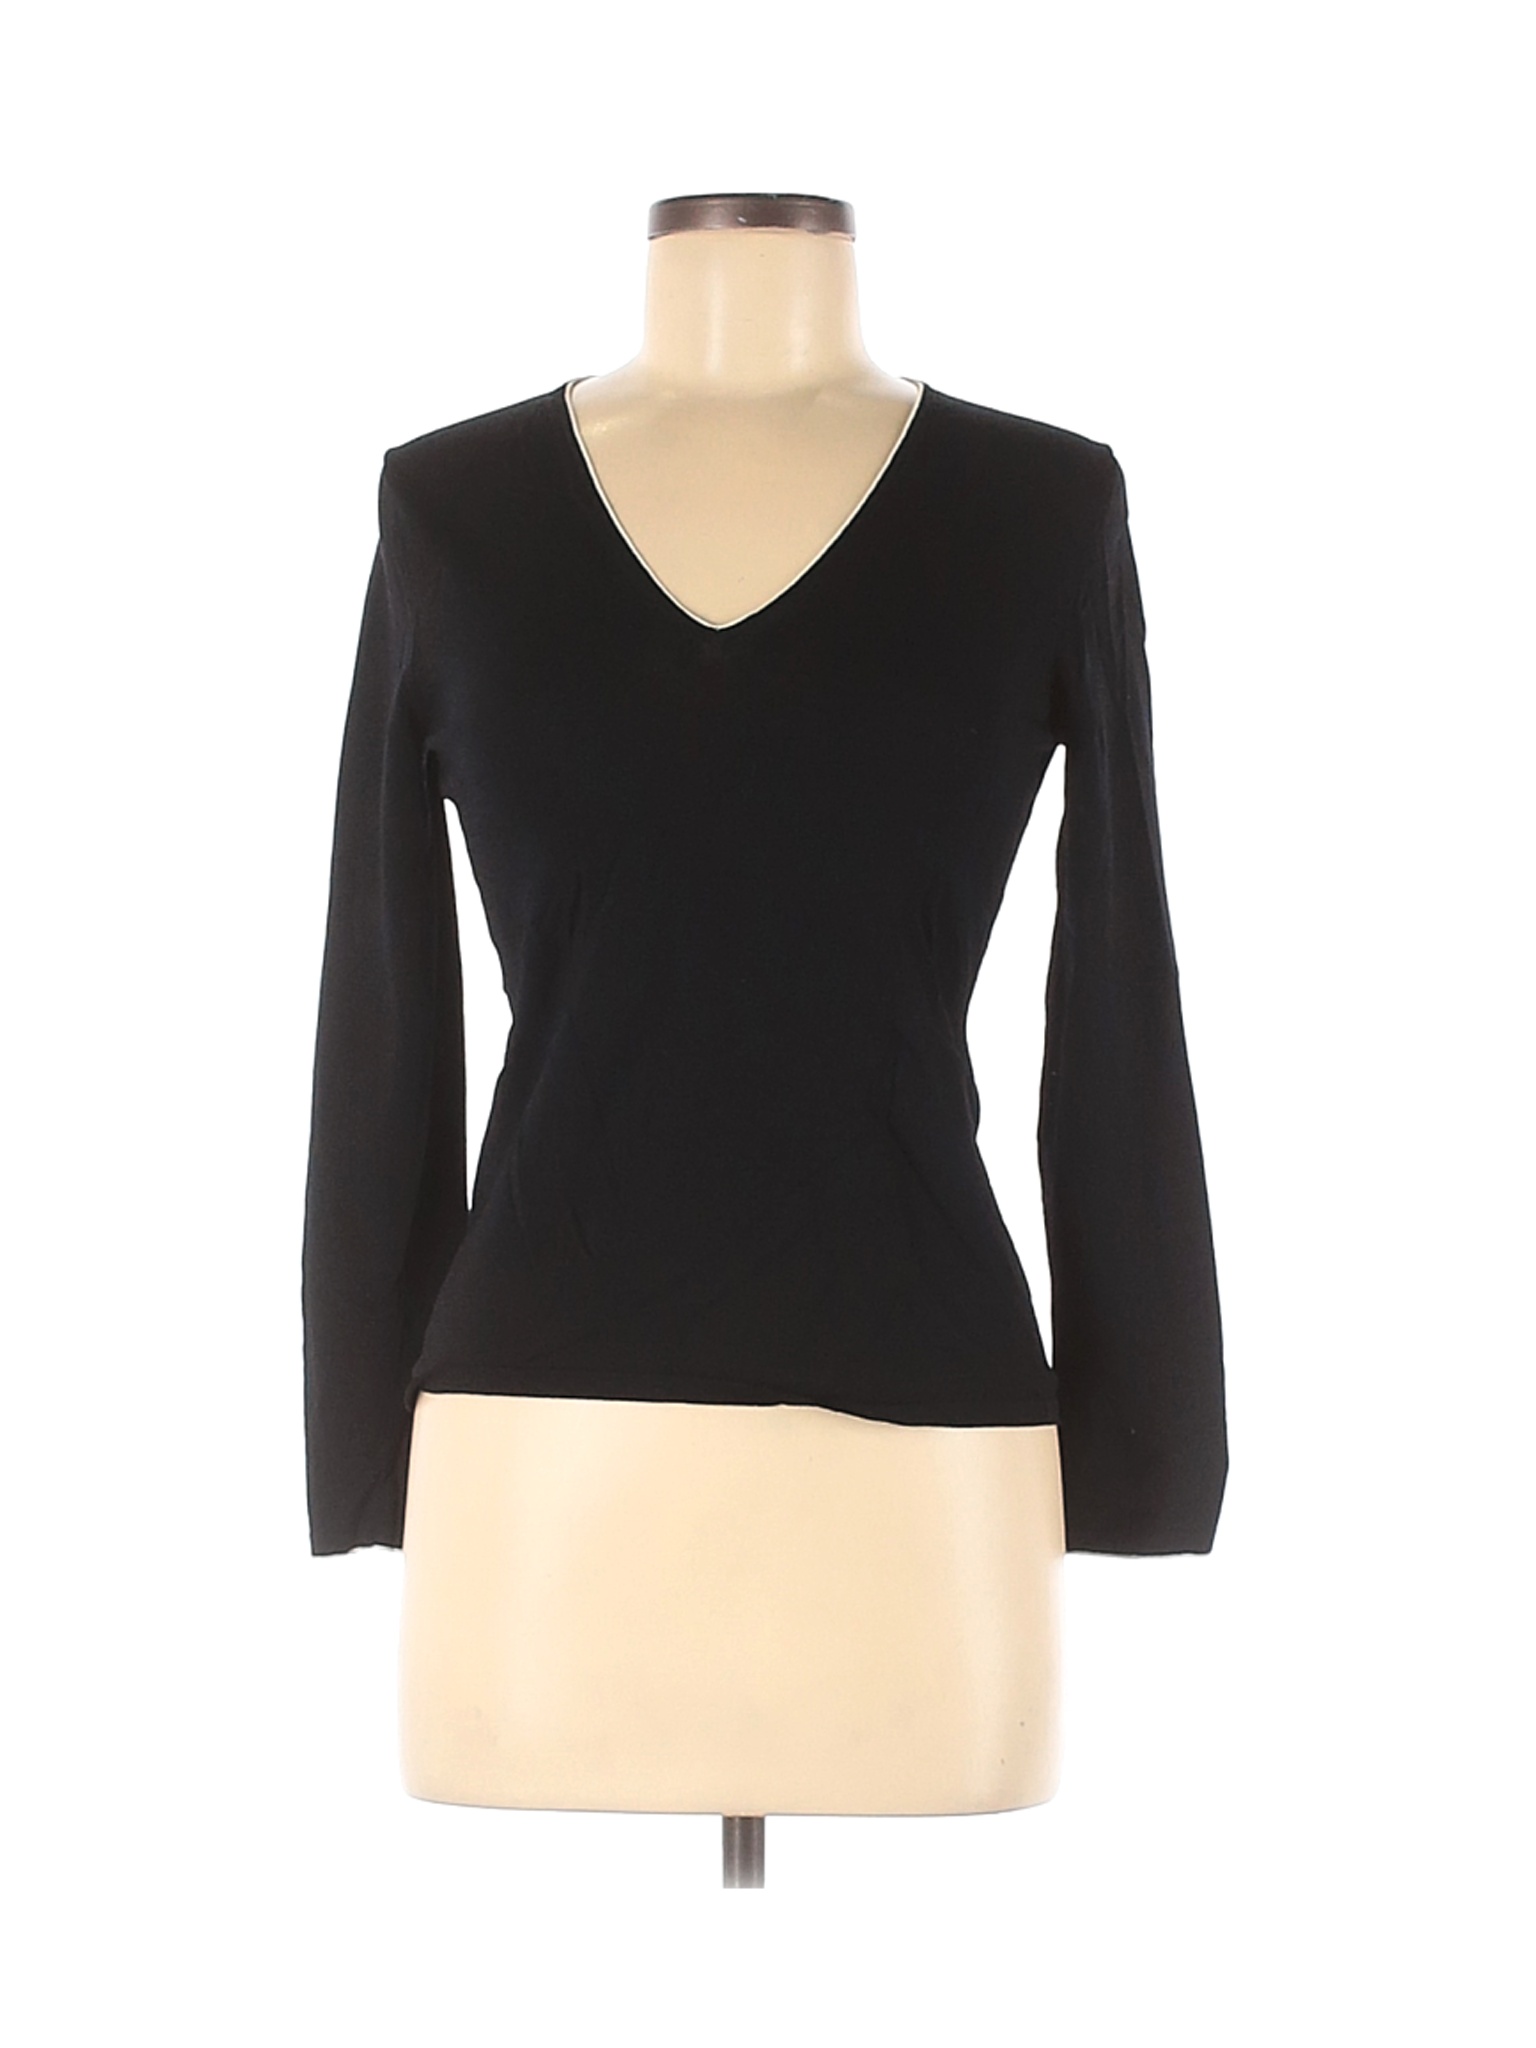 The Limited Women Black Long Sleeve Top M | eBay